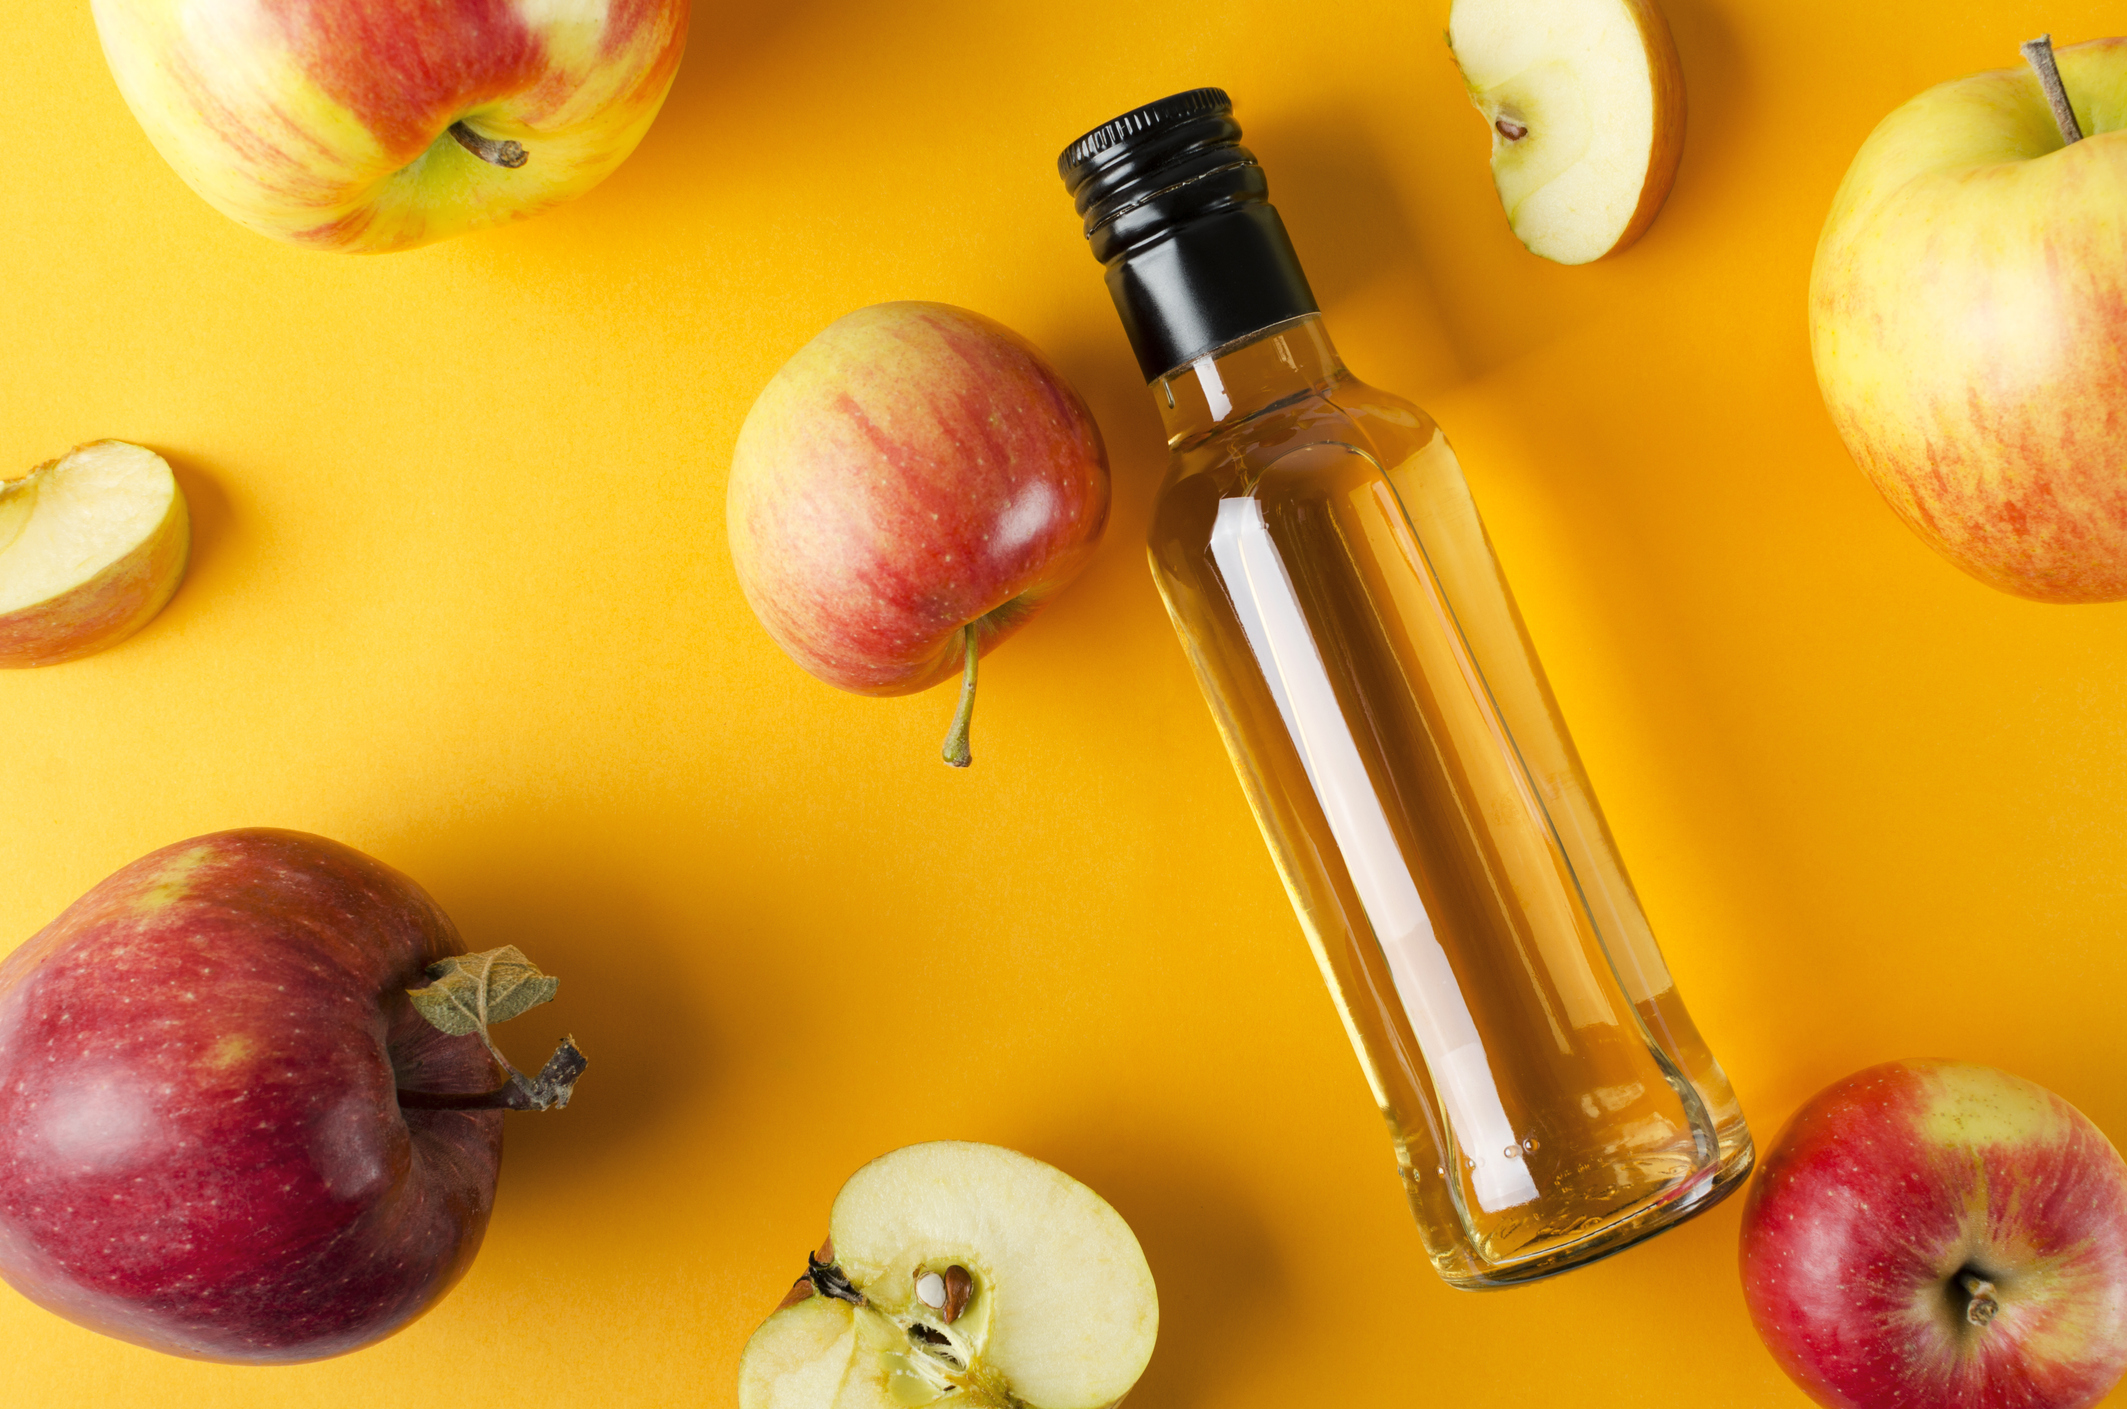 5 ailments to take apple cider vinegar for